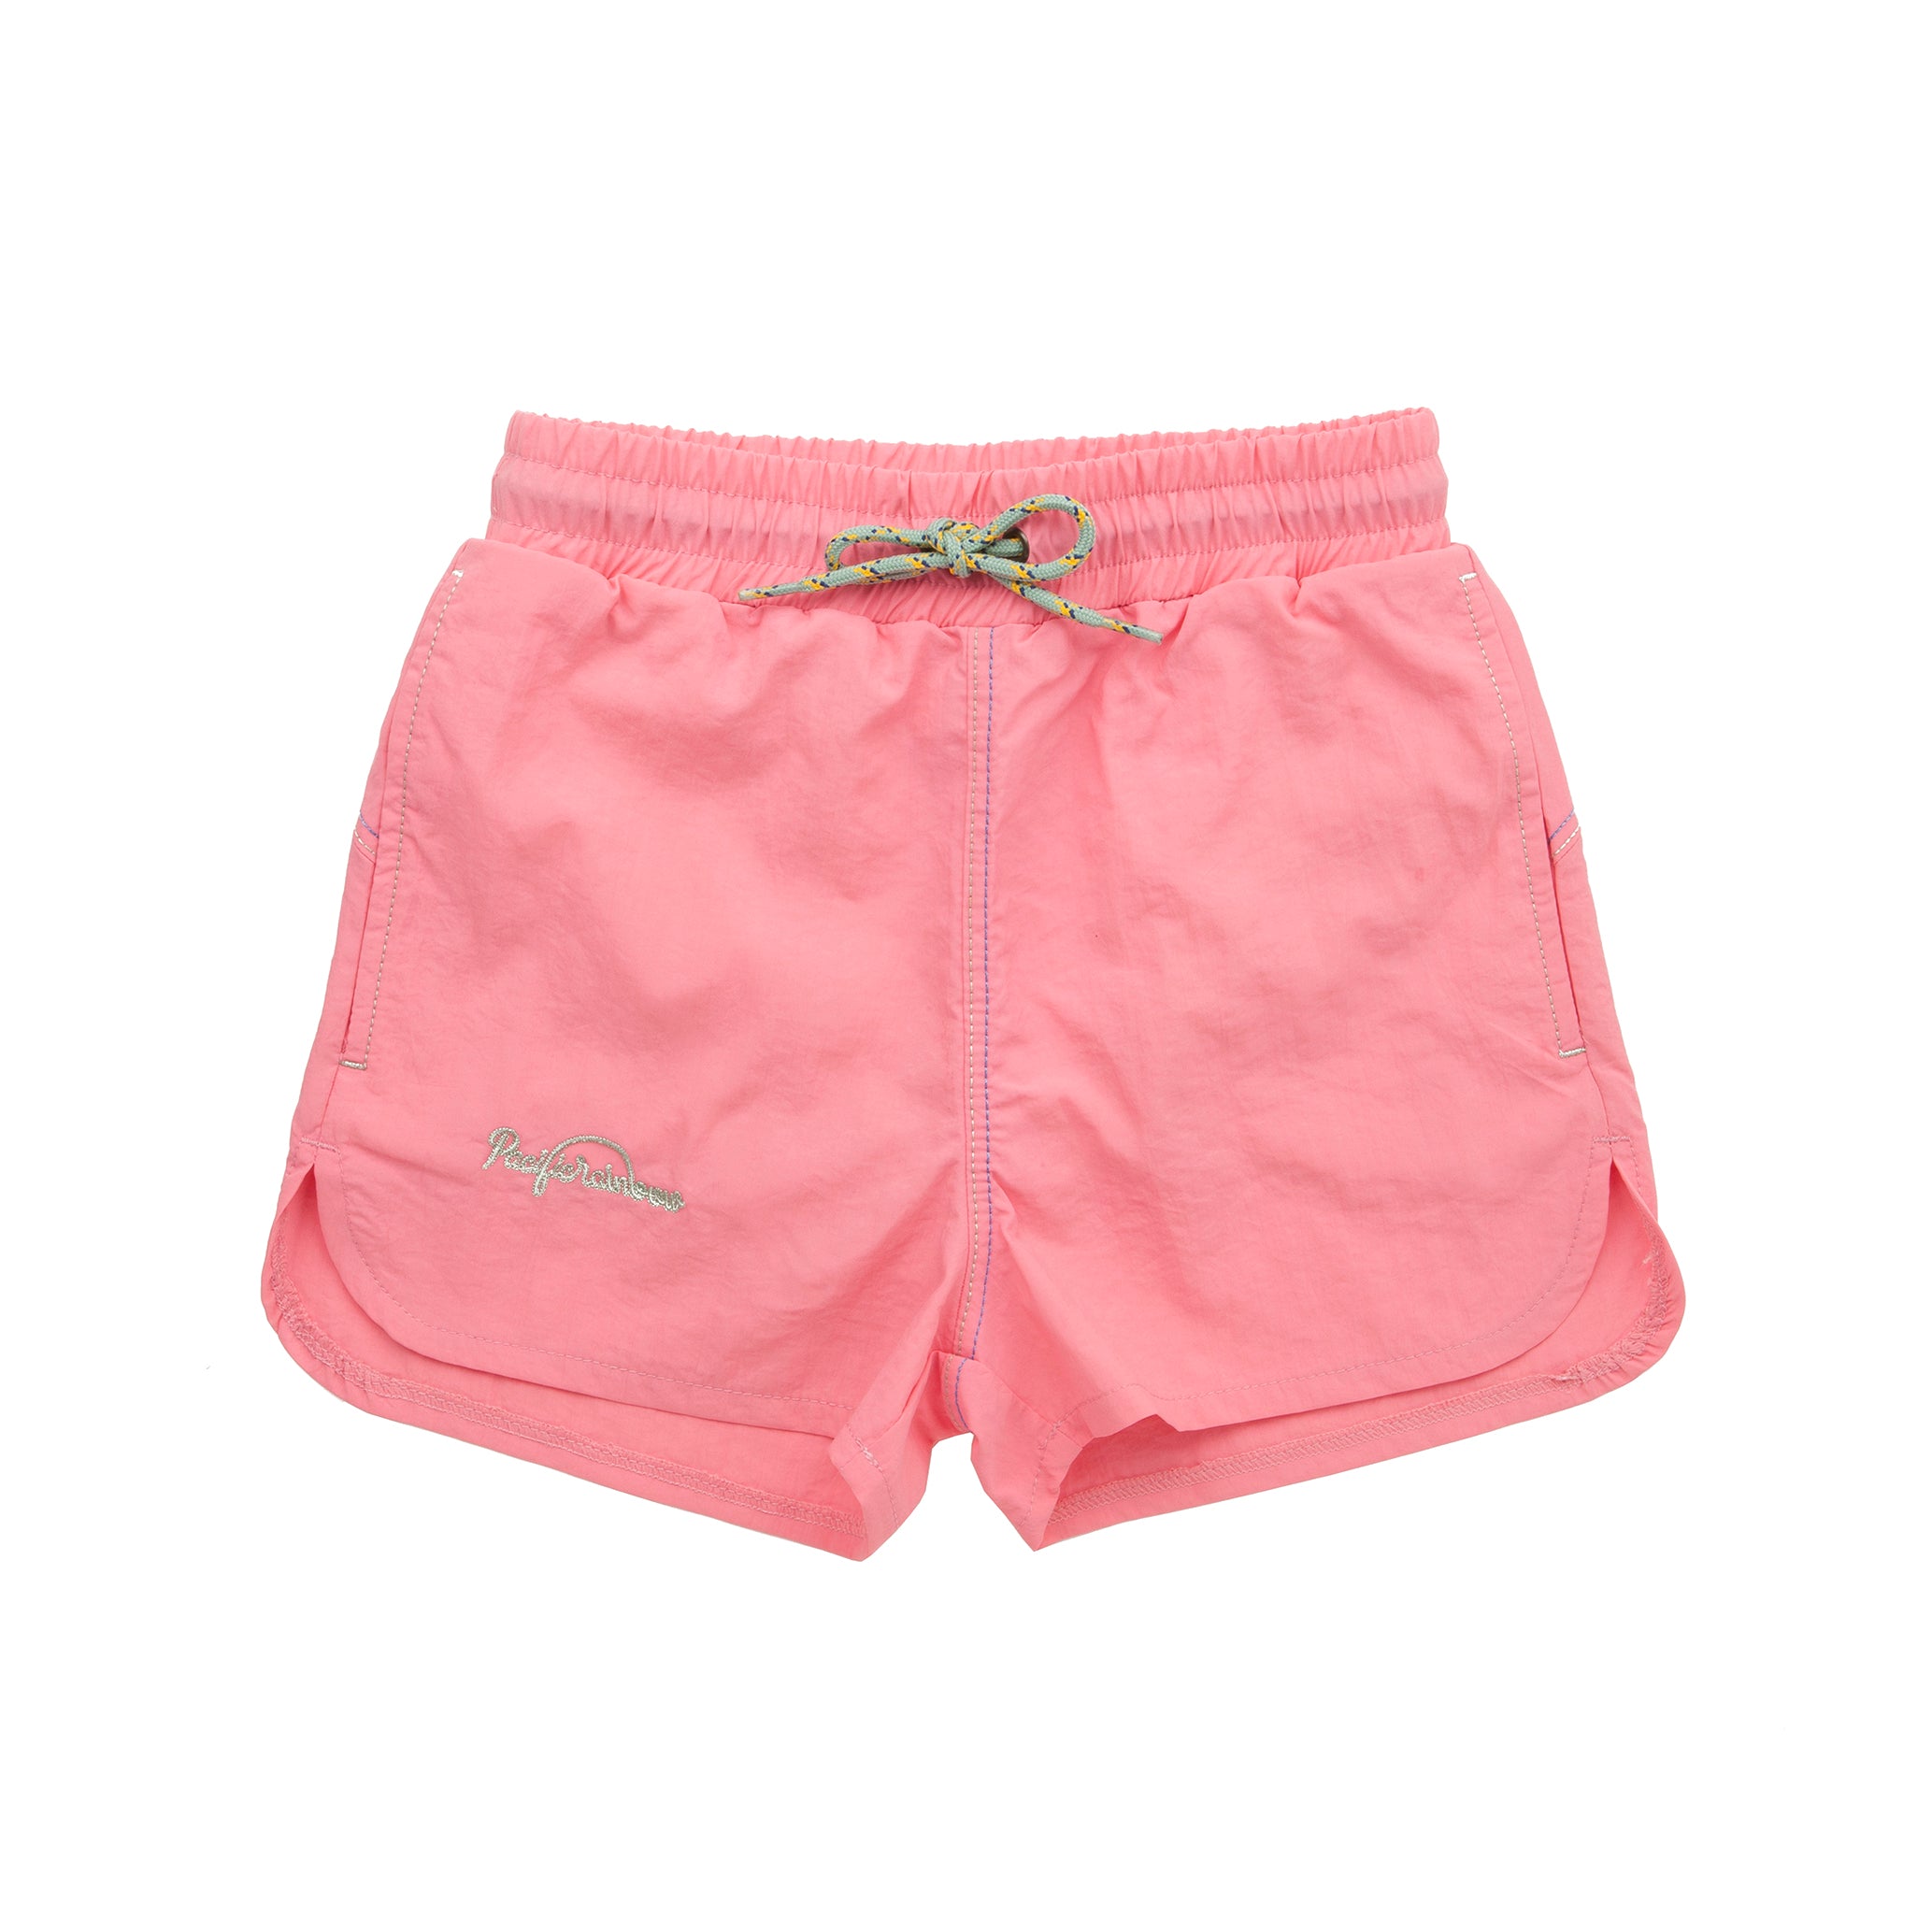 Jim Trunk shorts - Pink